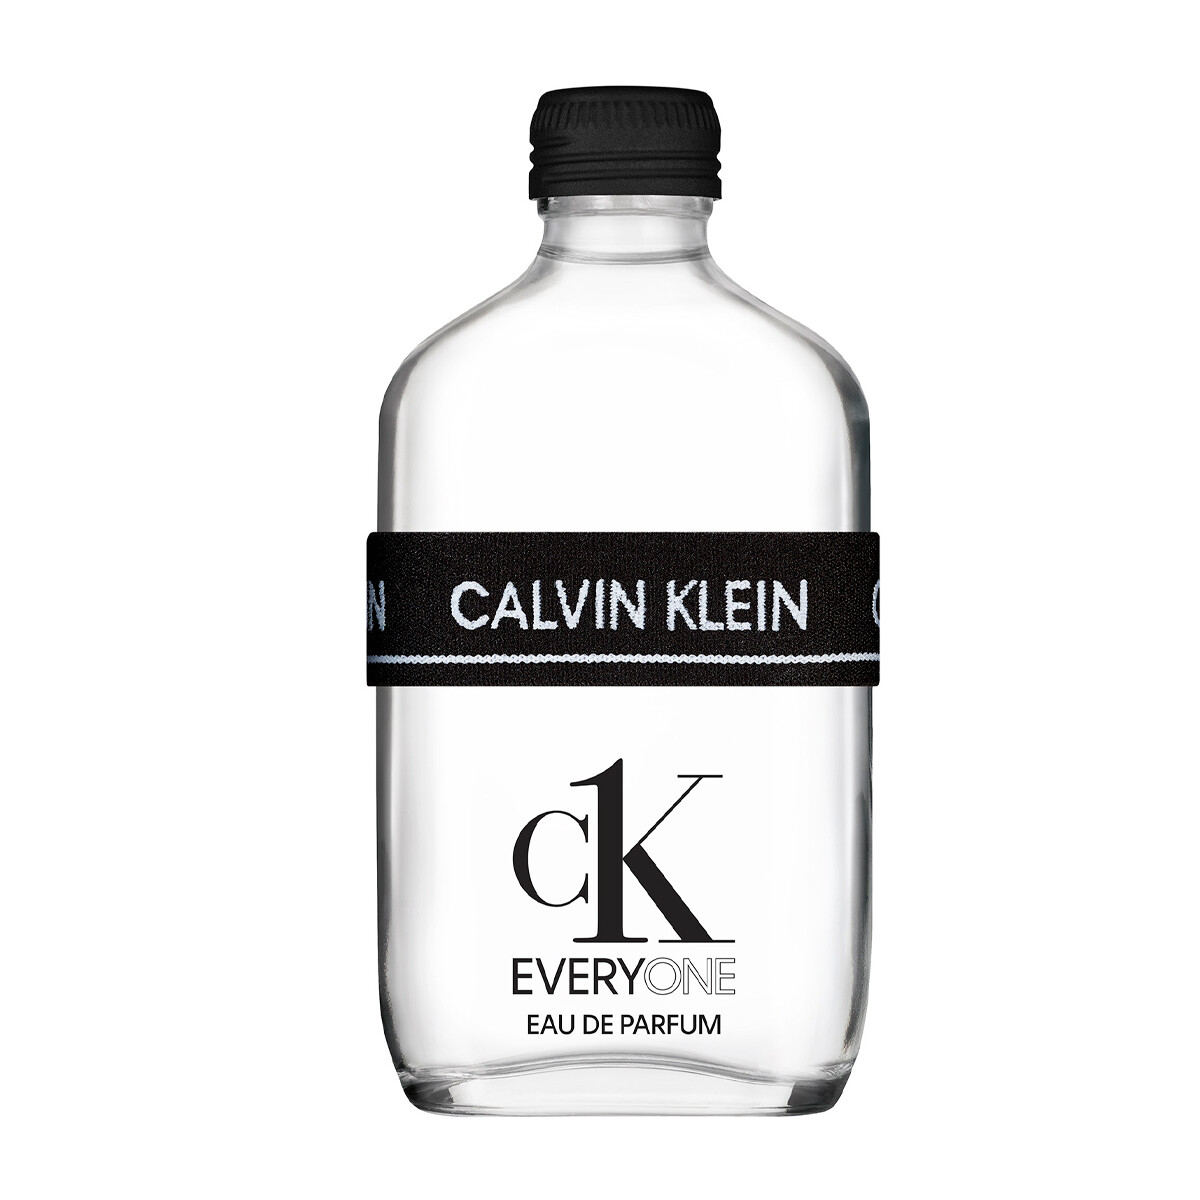 Perfume Ck Everyone Unisex De Calvin Klein Edp 100ml Volumen 